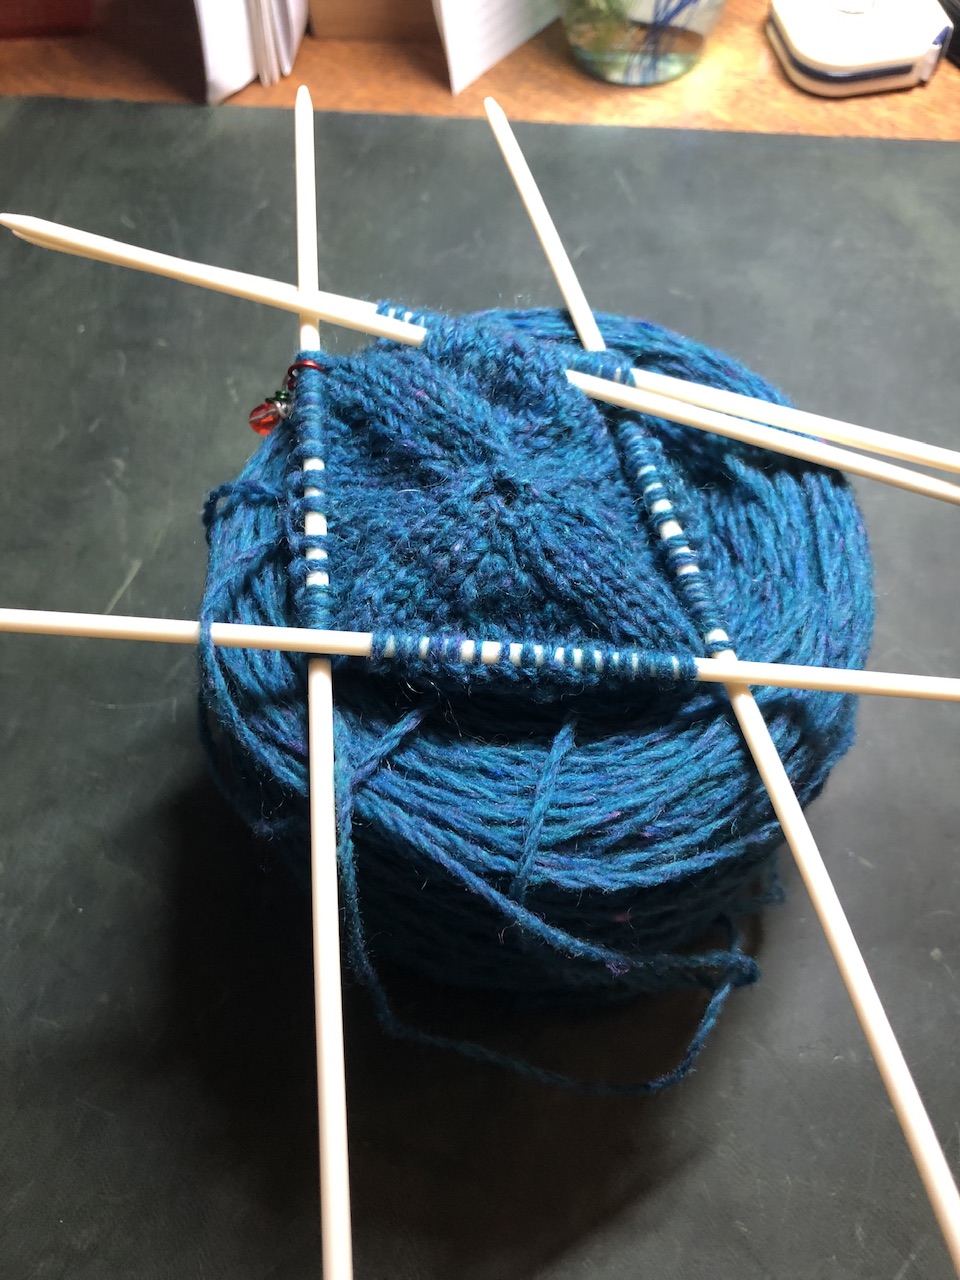 Bandwagon – The Knitting Doctor